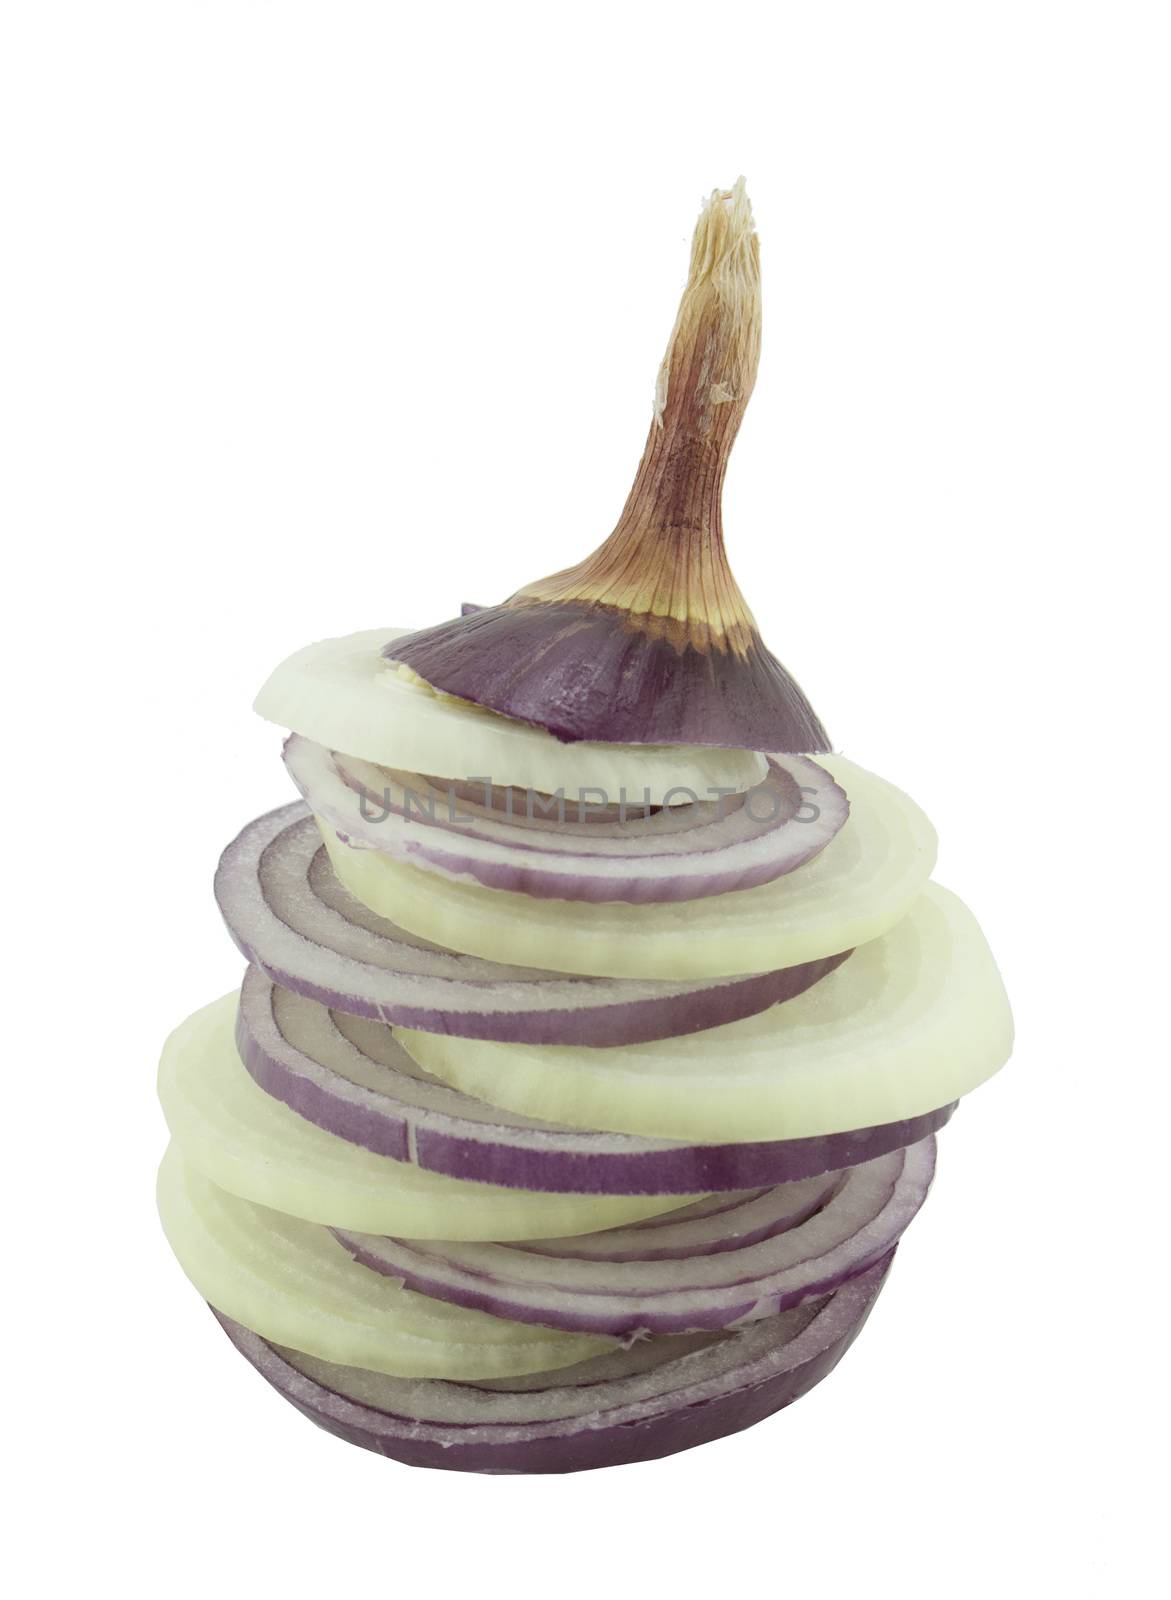 Sliced onion by designsstock